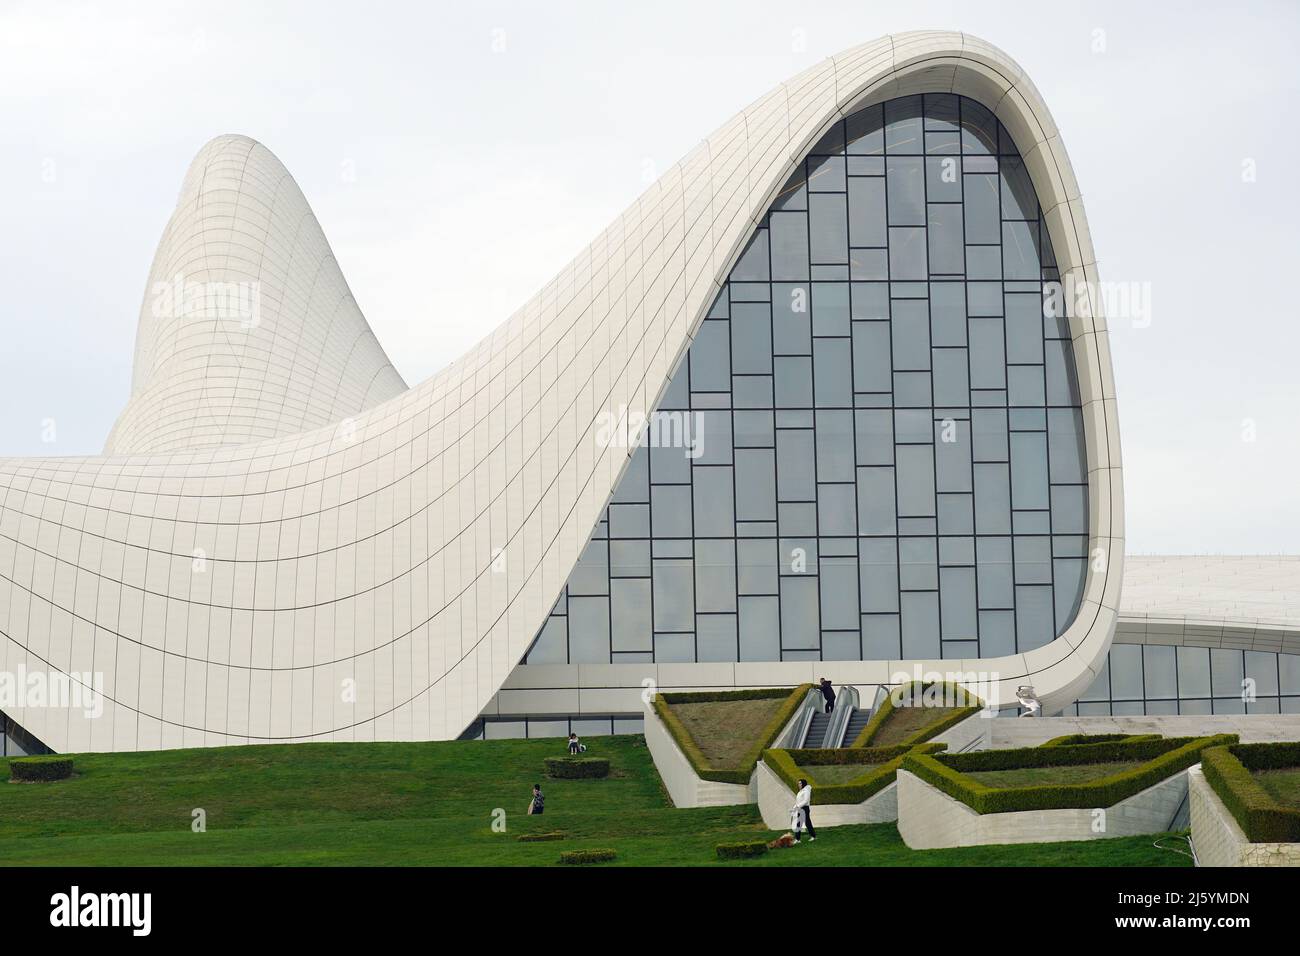 Heydar Aliyev Center Designed By Iraqi British Architect Zaha Hadid Heyd R Liyev M Rk Zi